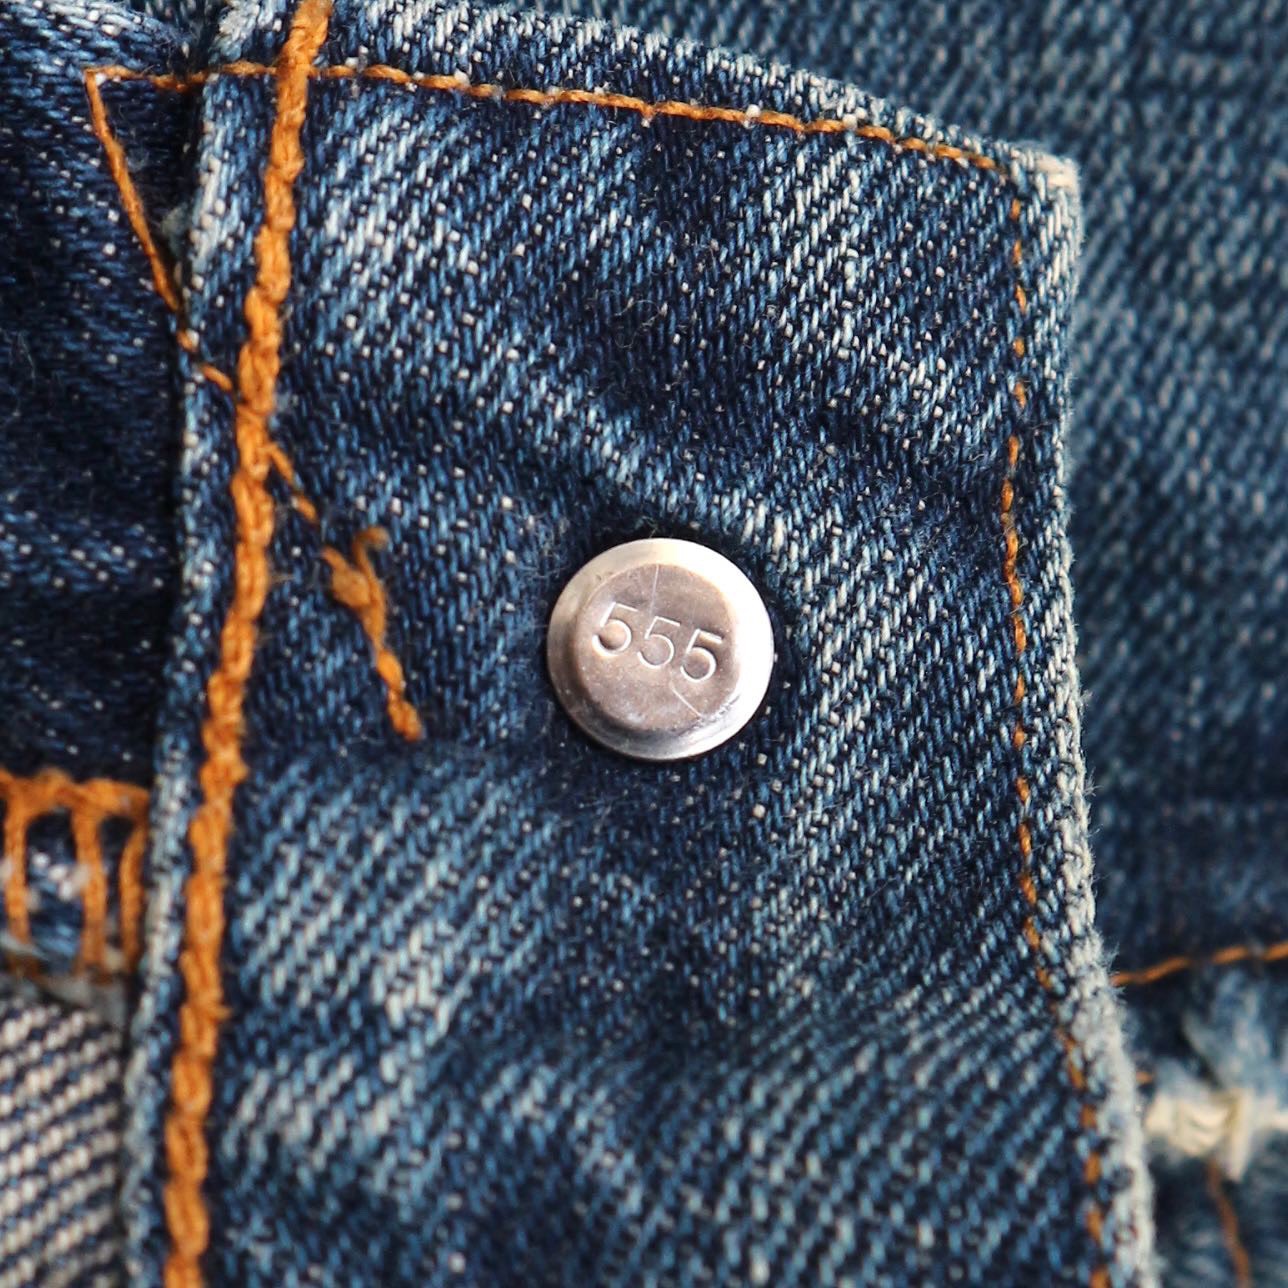 LEVI'S VINTAGE CLOTHING Selvedge Denim Jeans 29 denimister